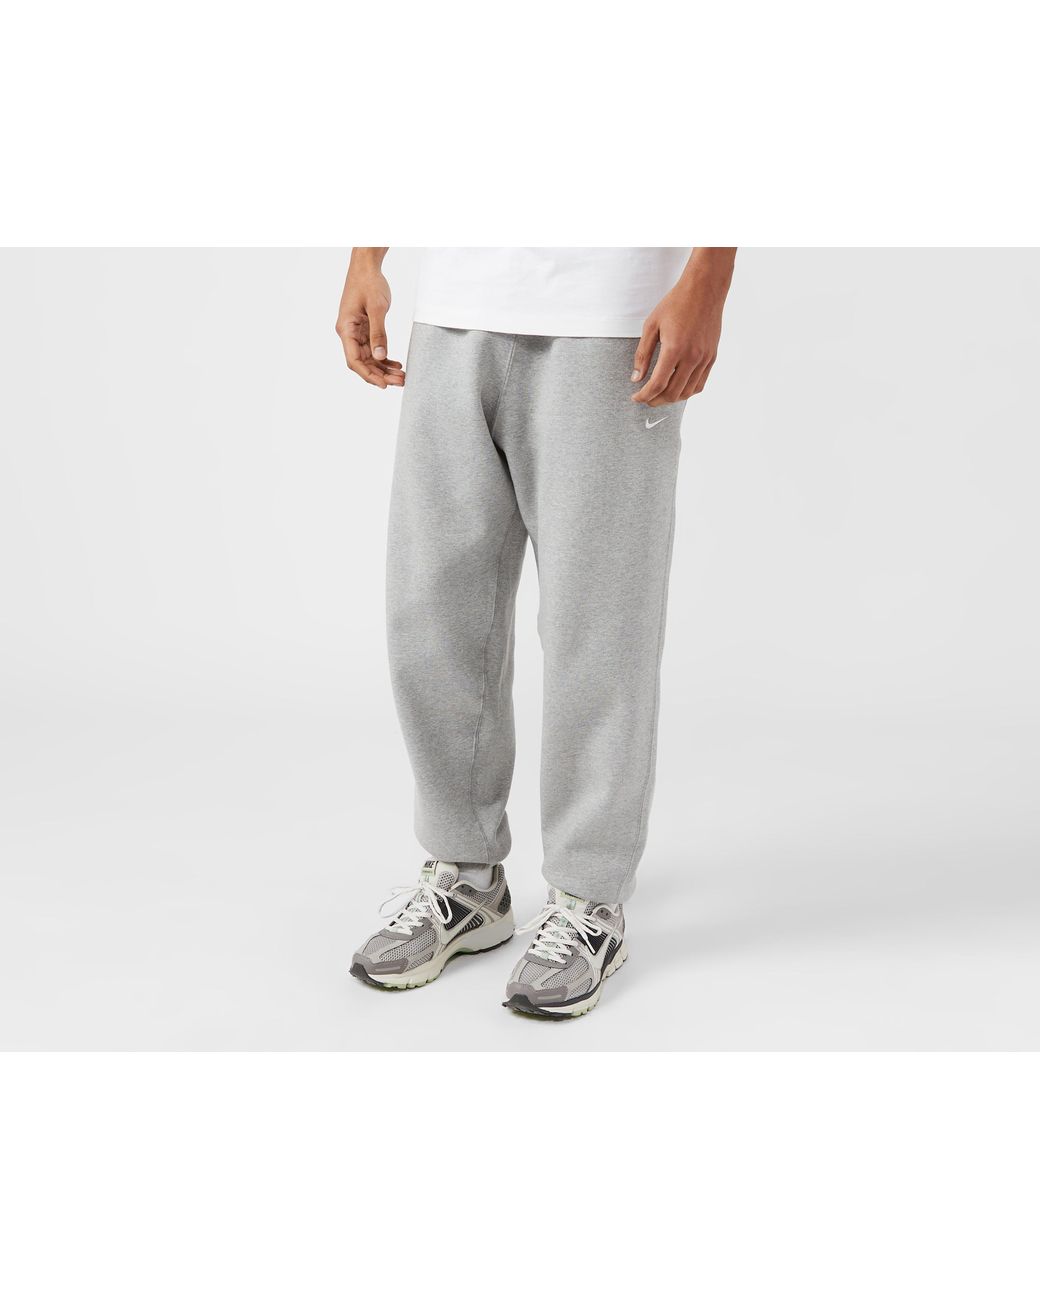 https://cdna.lystit.com/1040/1300/n/photos/size/5e48fdc0/nike-Grey-Nrg-Premium-Essentials-Fleece-Pants.jpeg